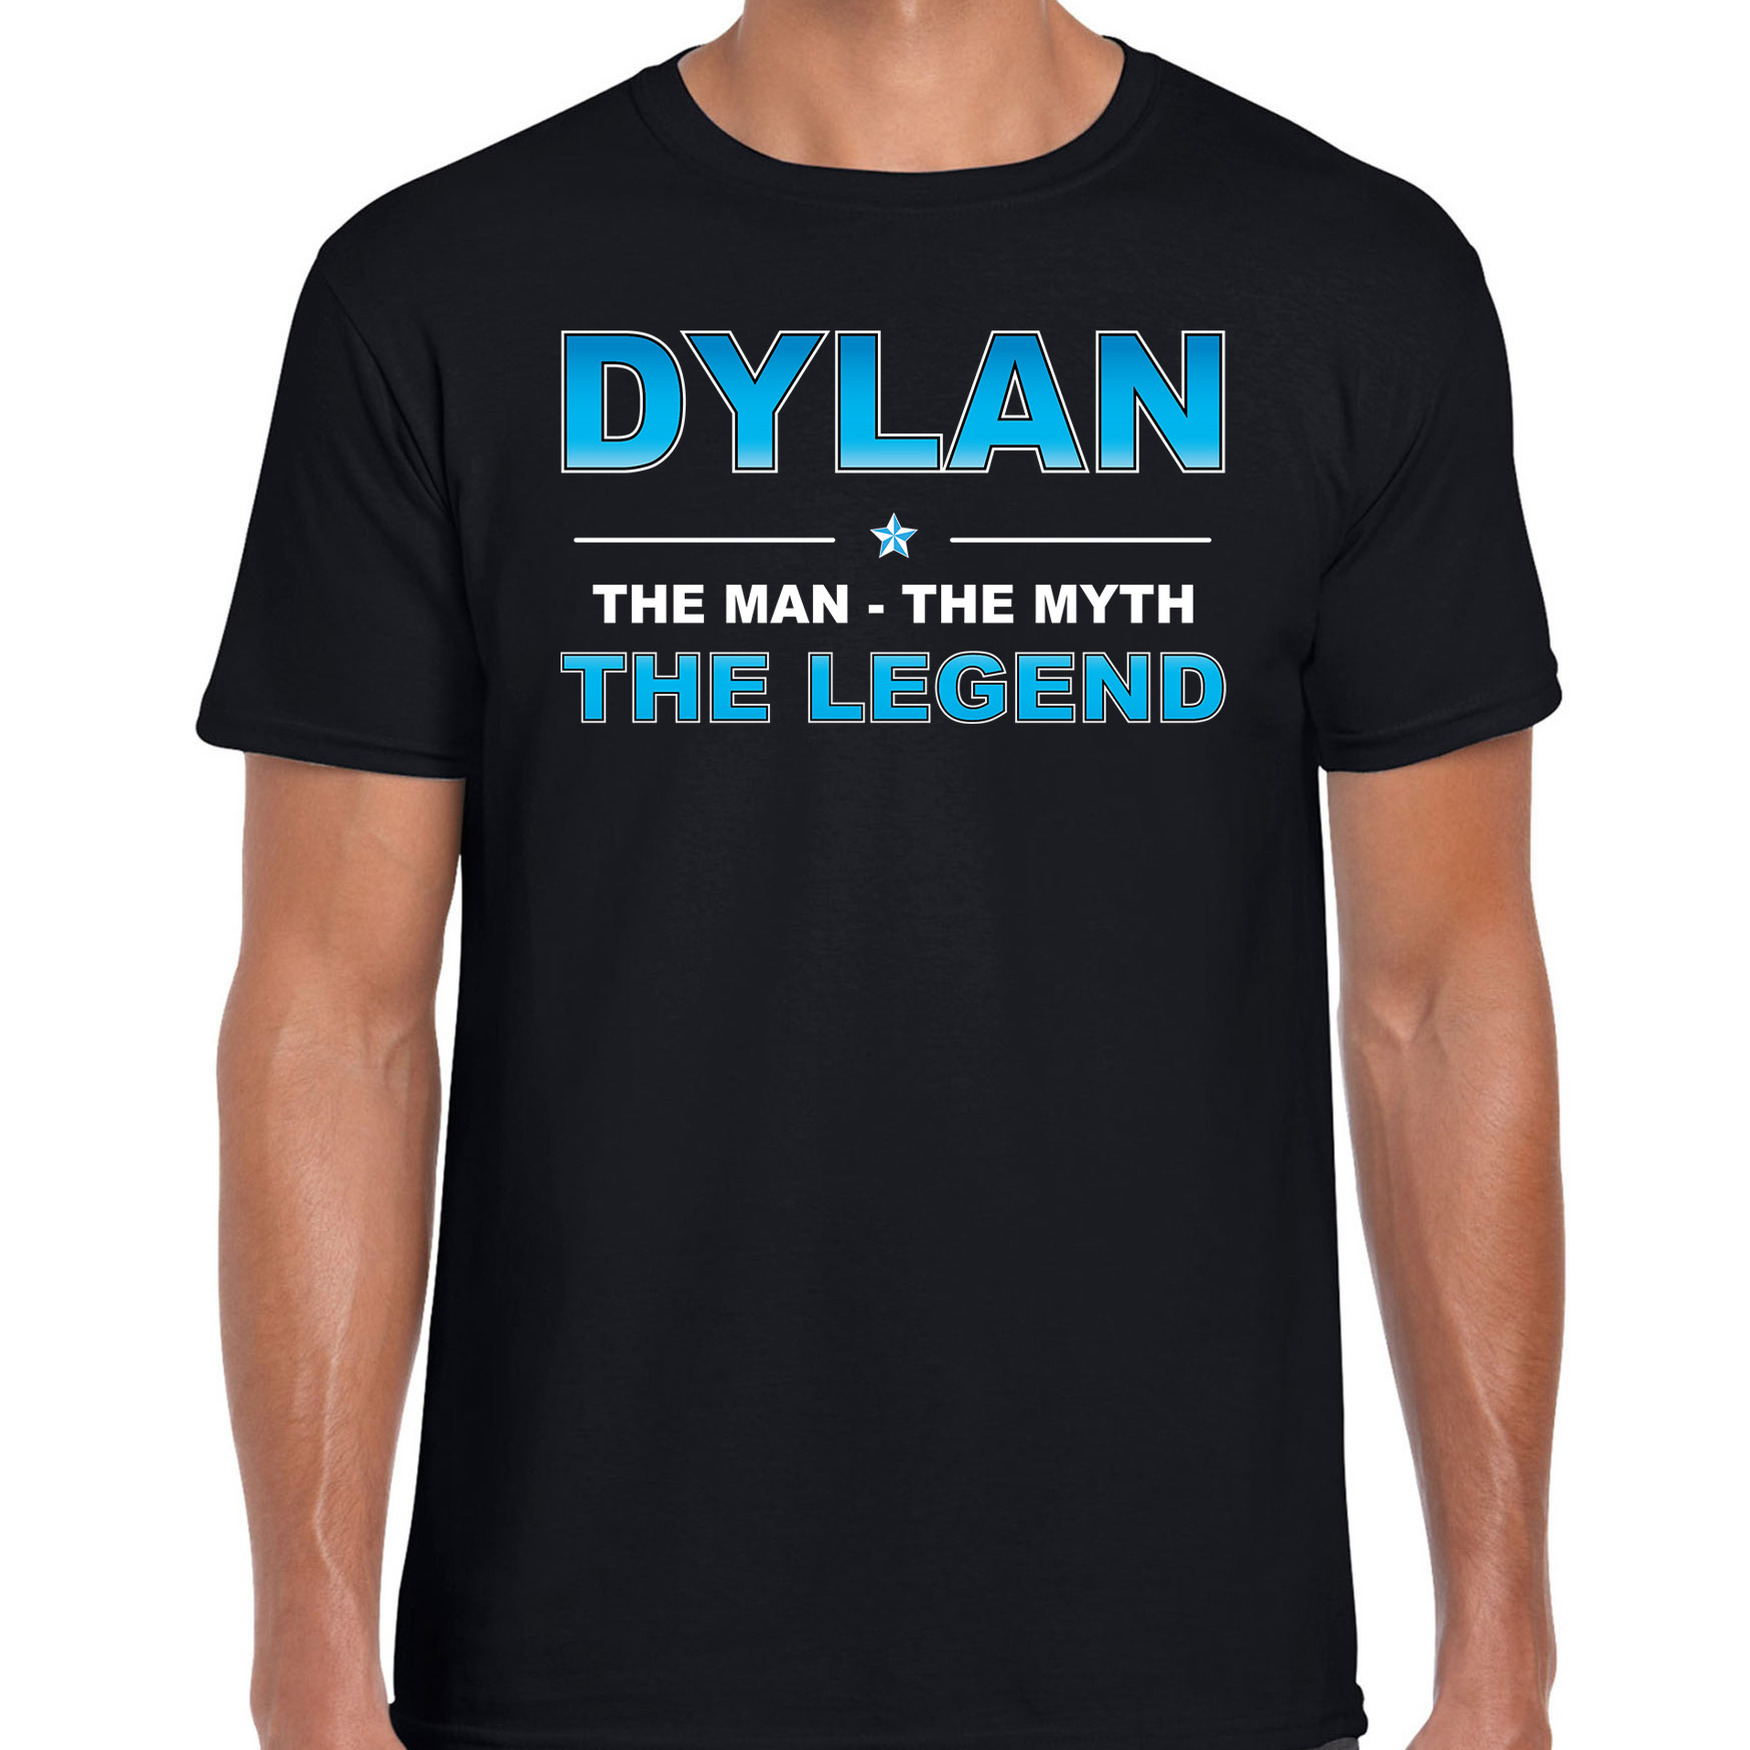 Naam cadeau t-shirt Dylan - the legend zwart voor heren